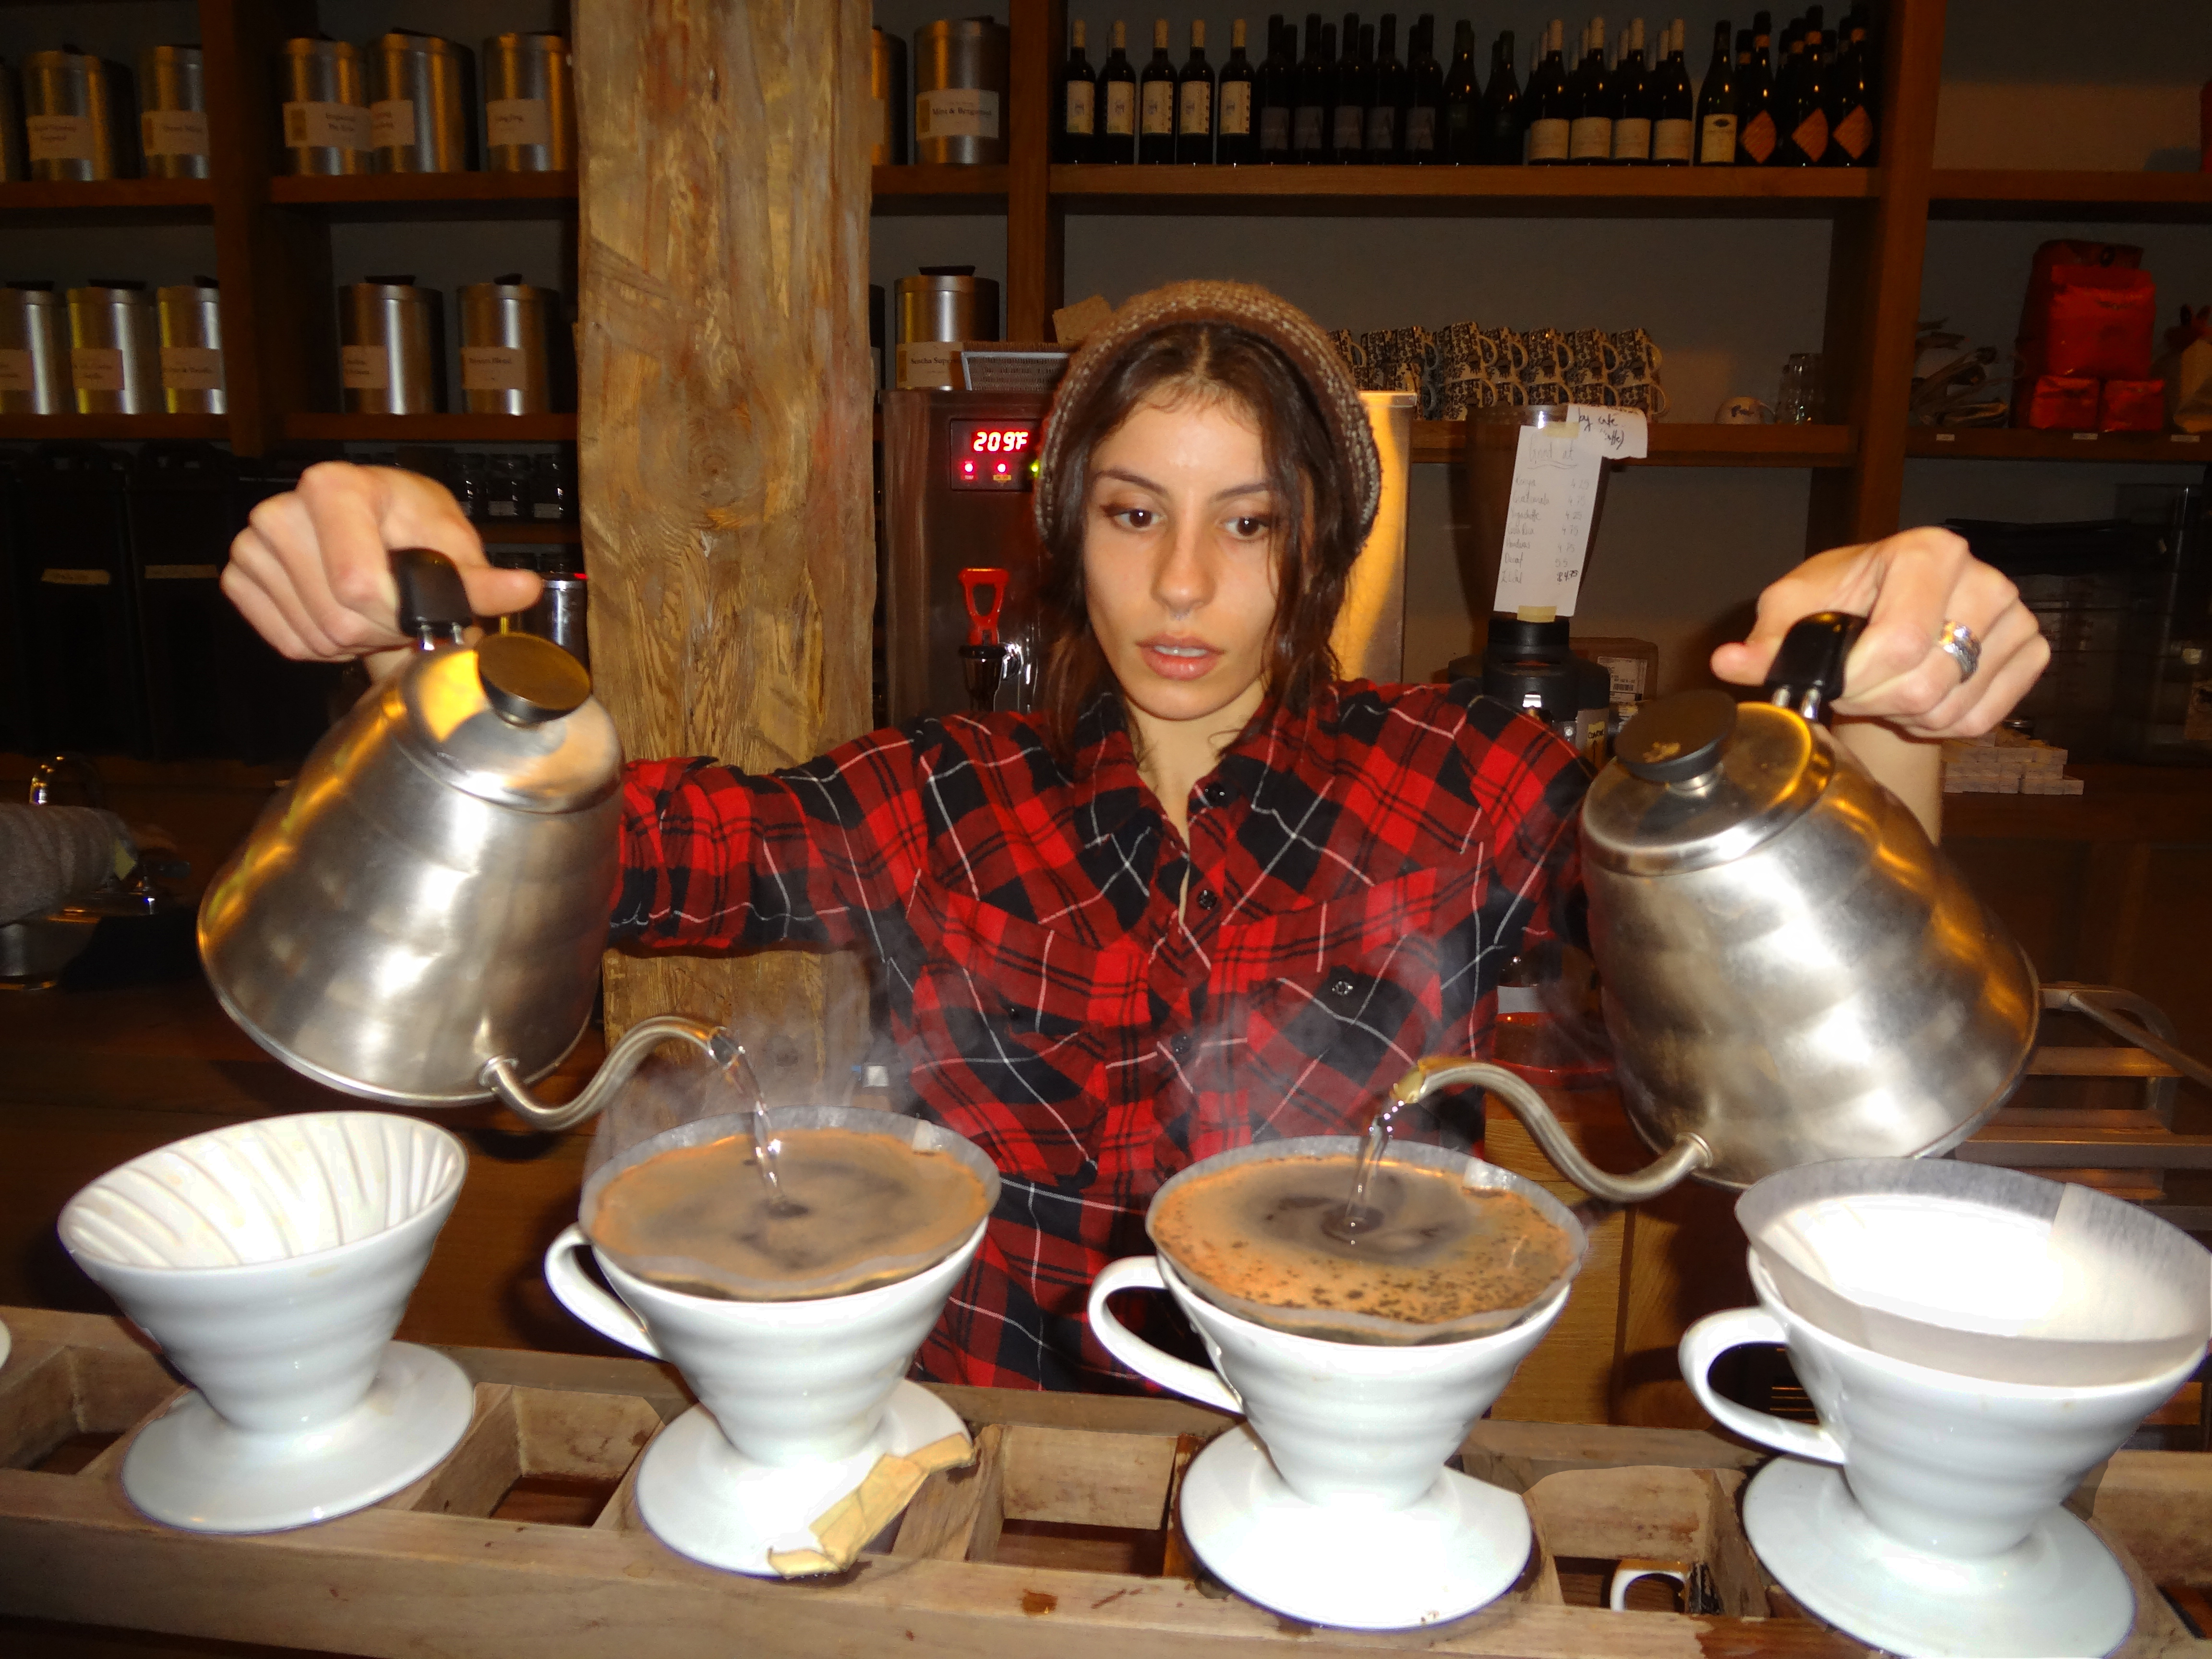 Kaffe 1668 pour over lady